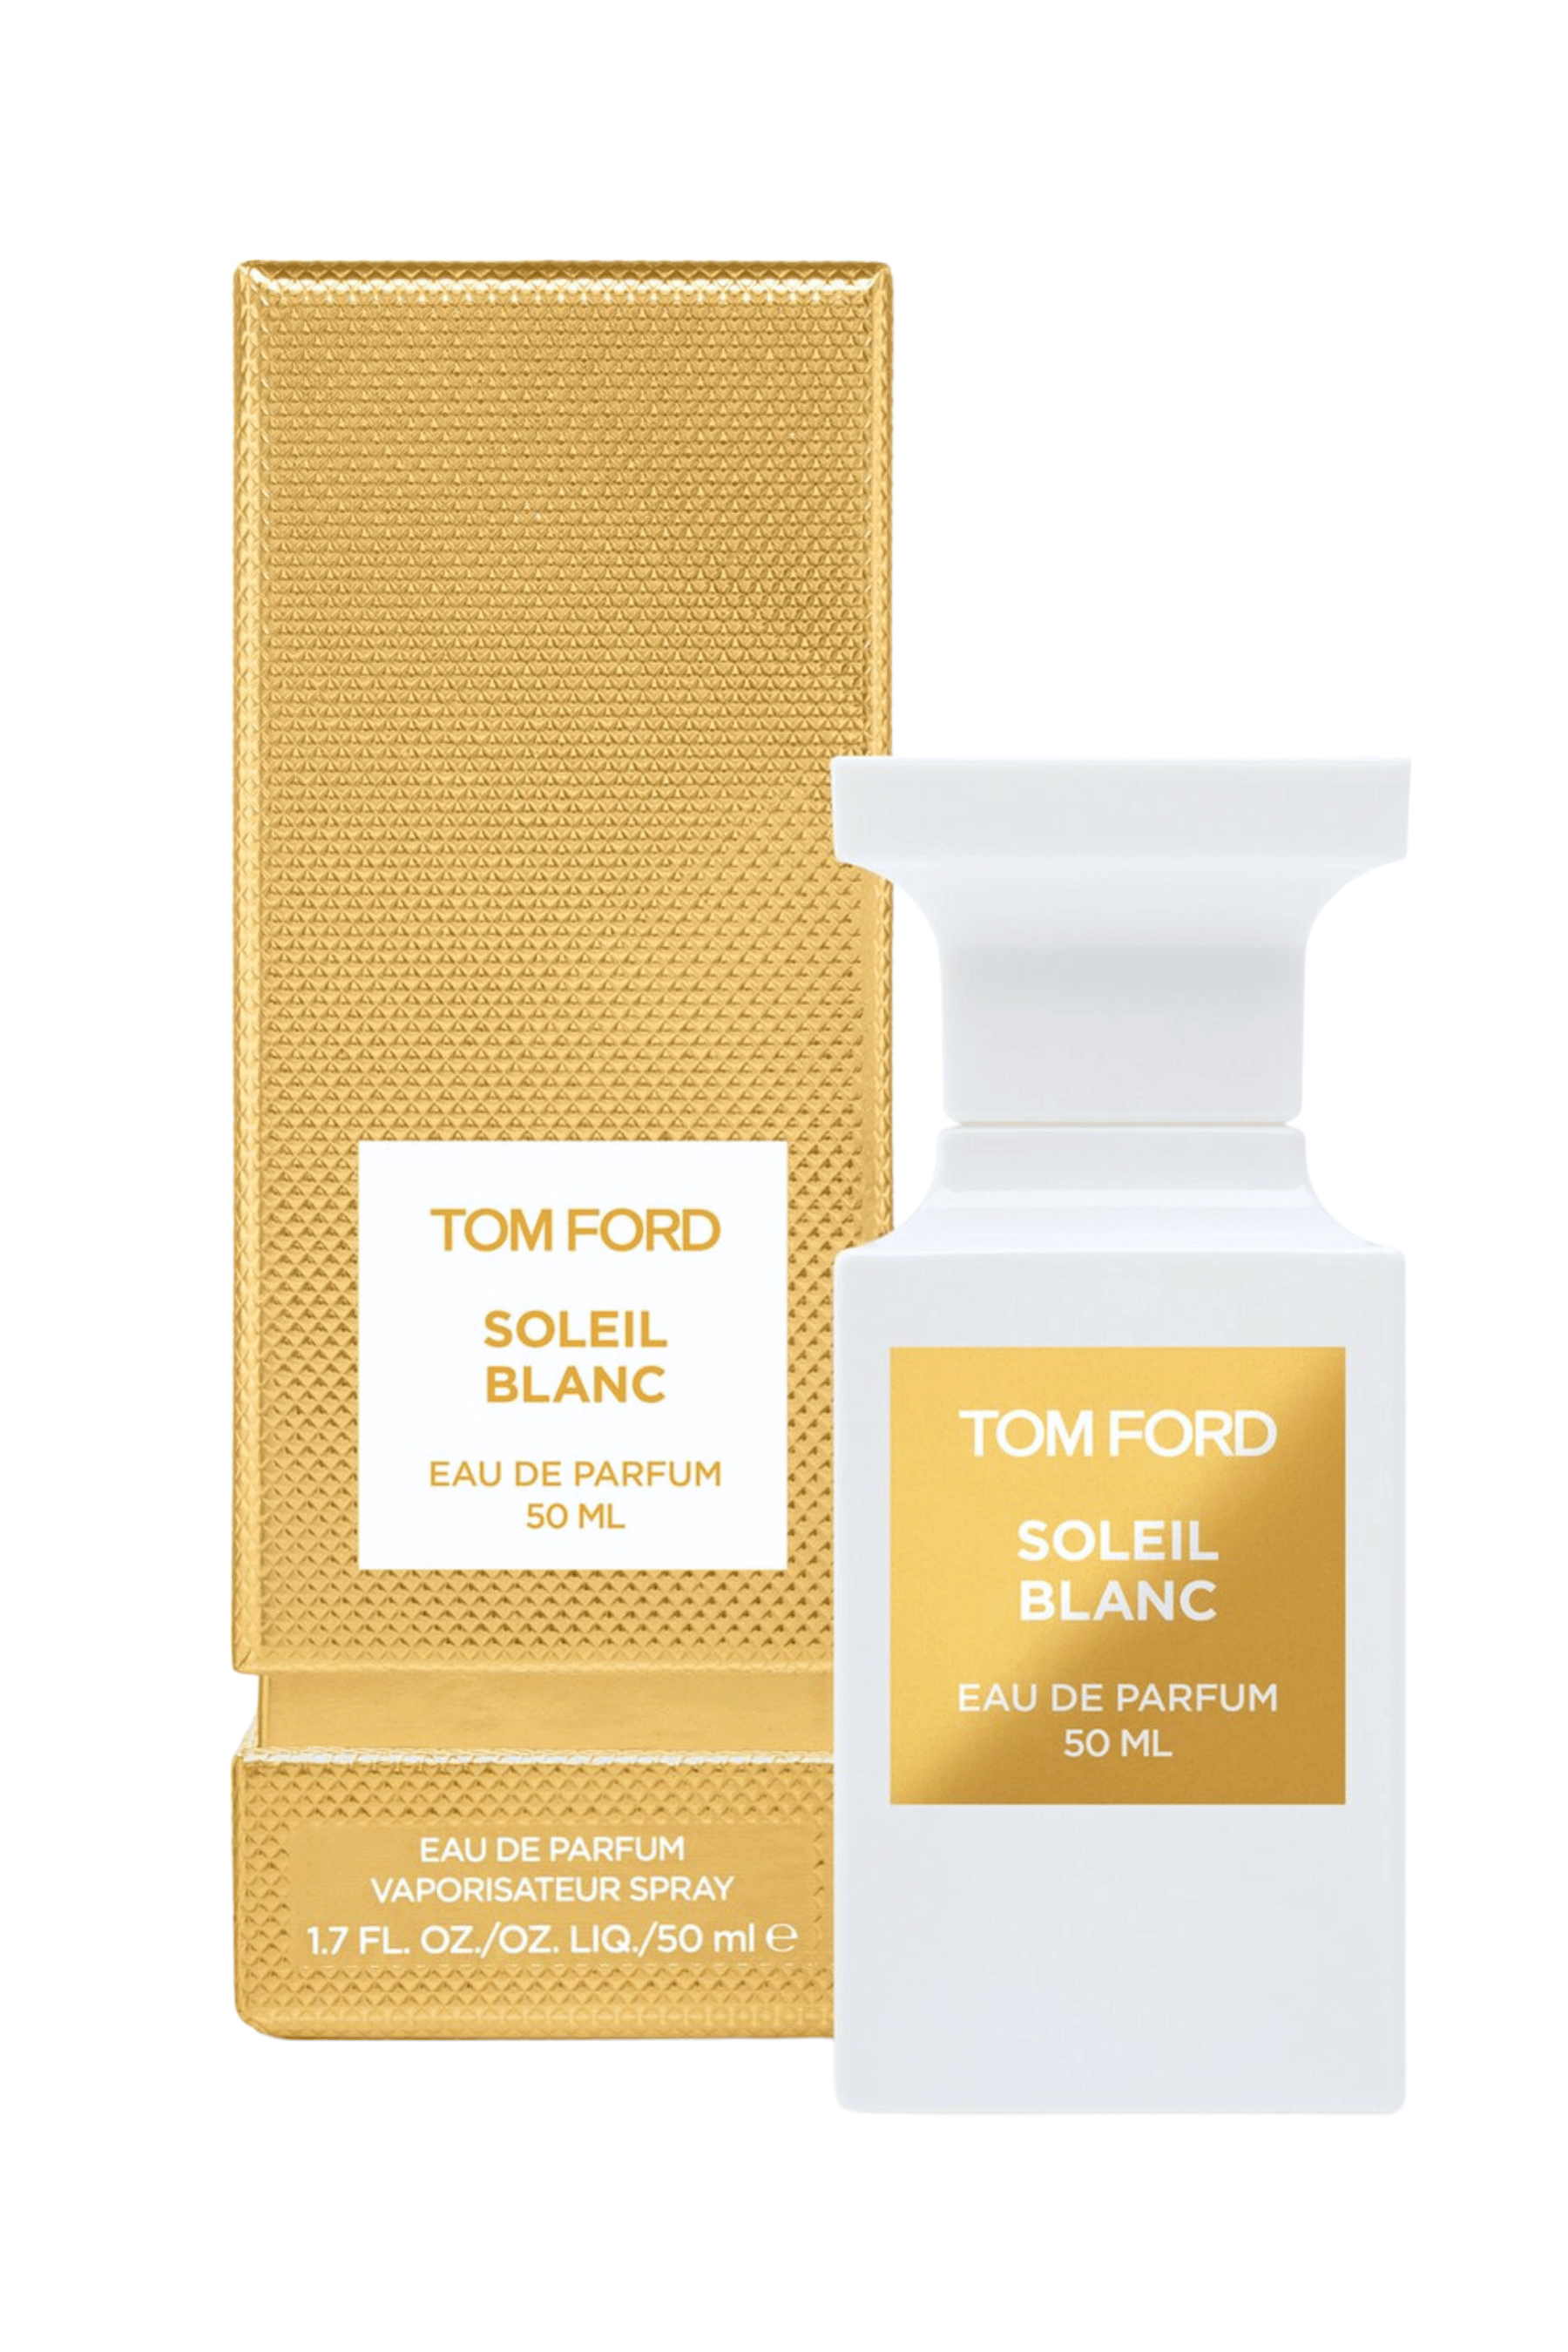 Tom ford Tom ford soleil blanc Eau De Parfum Spray